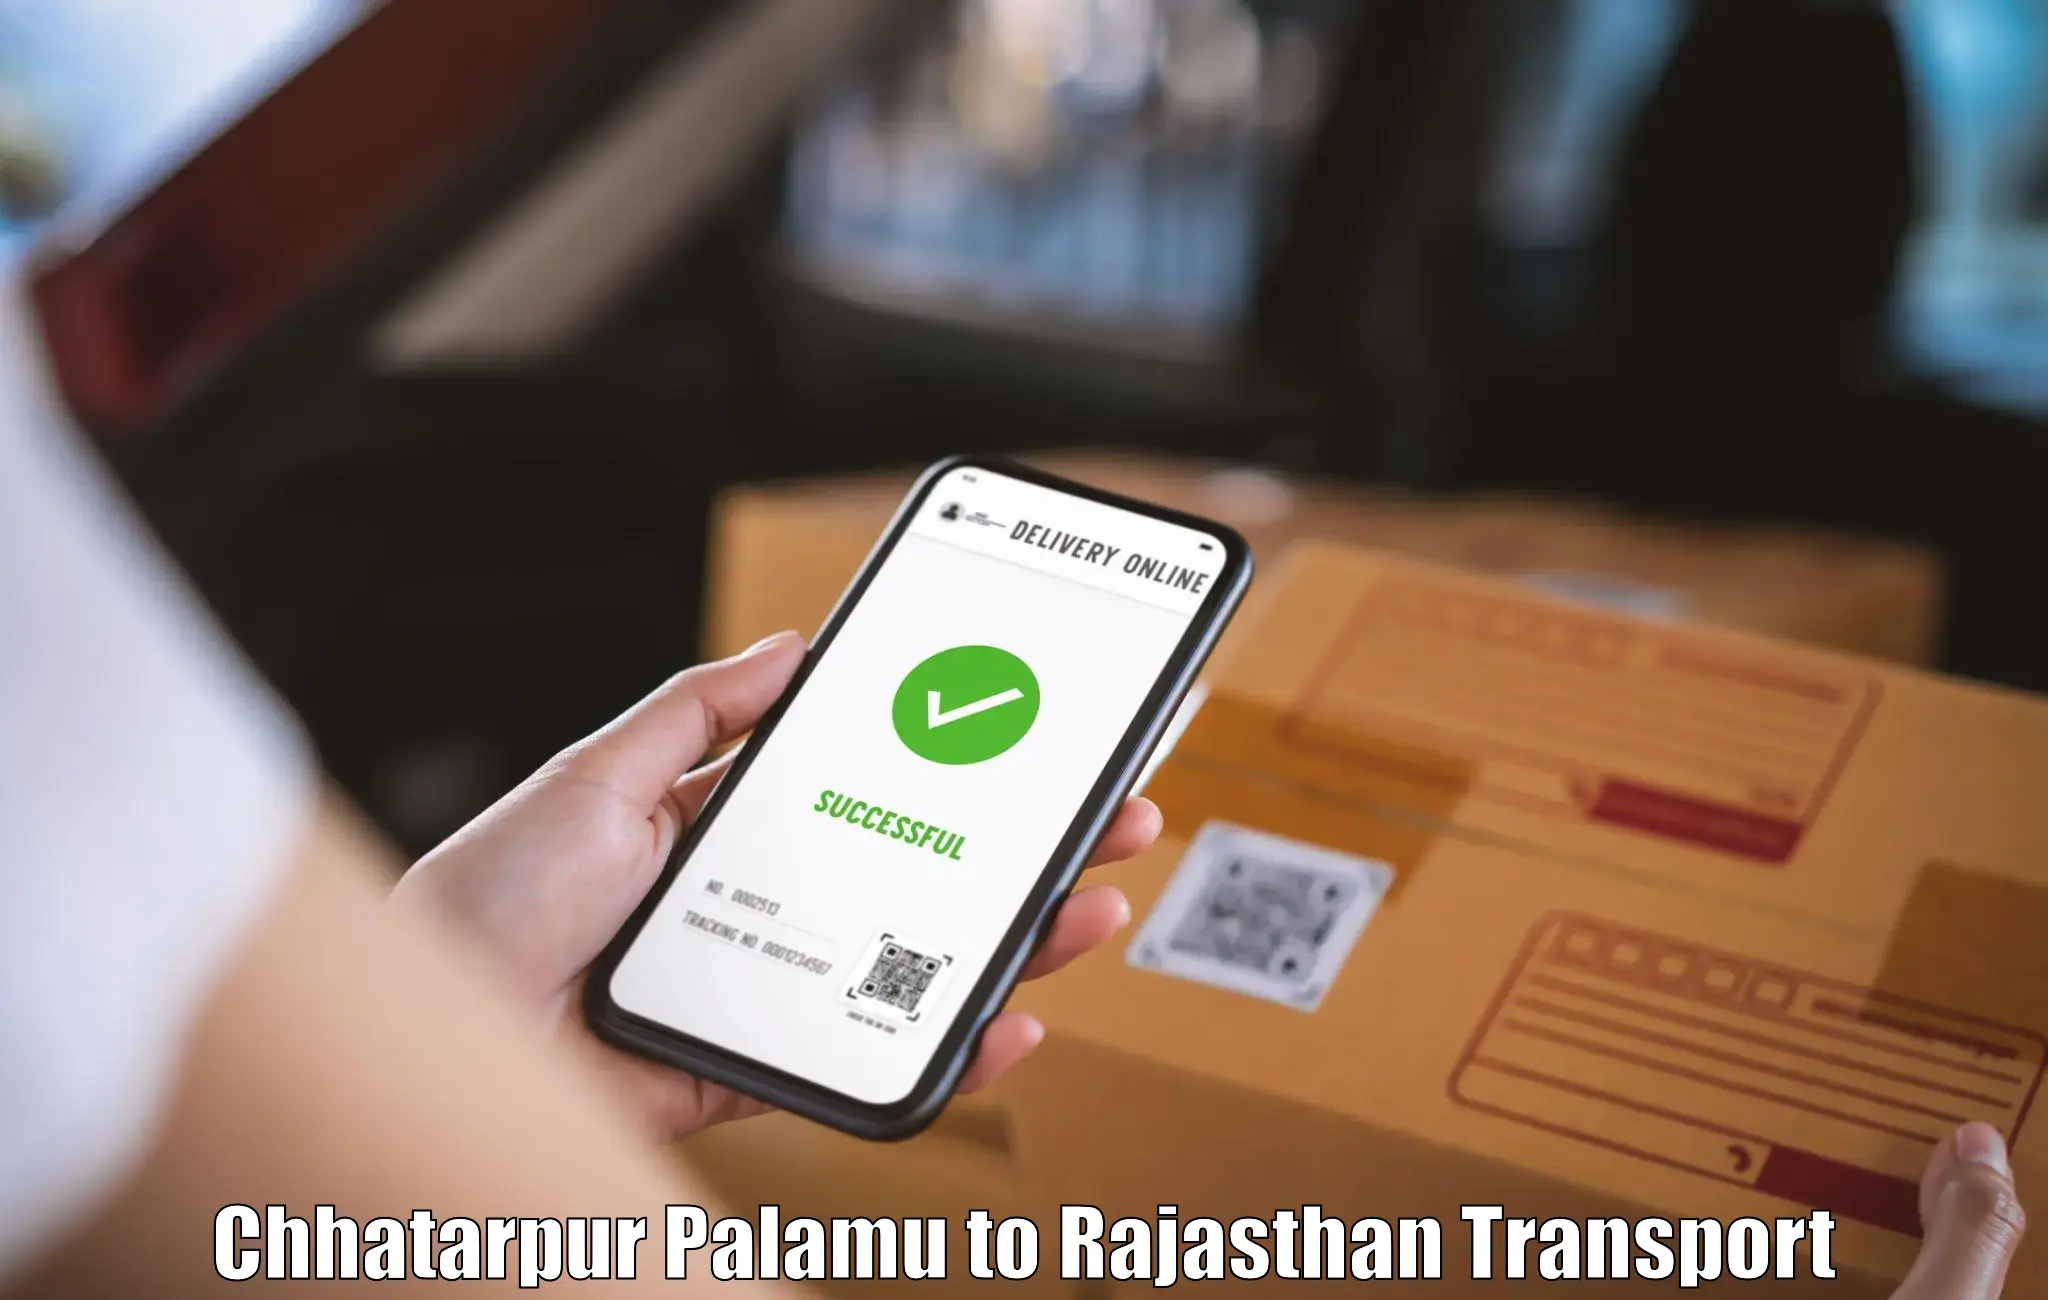 Shipping partner Chhatarpur Palamu to Tonk